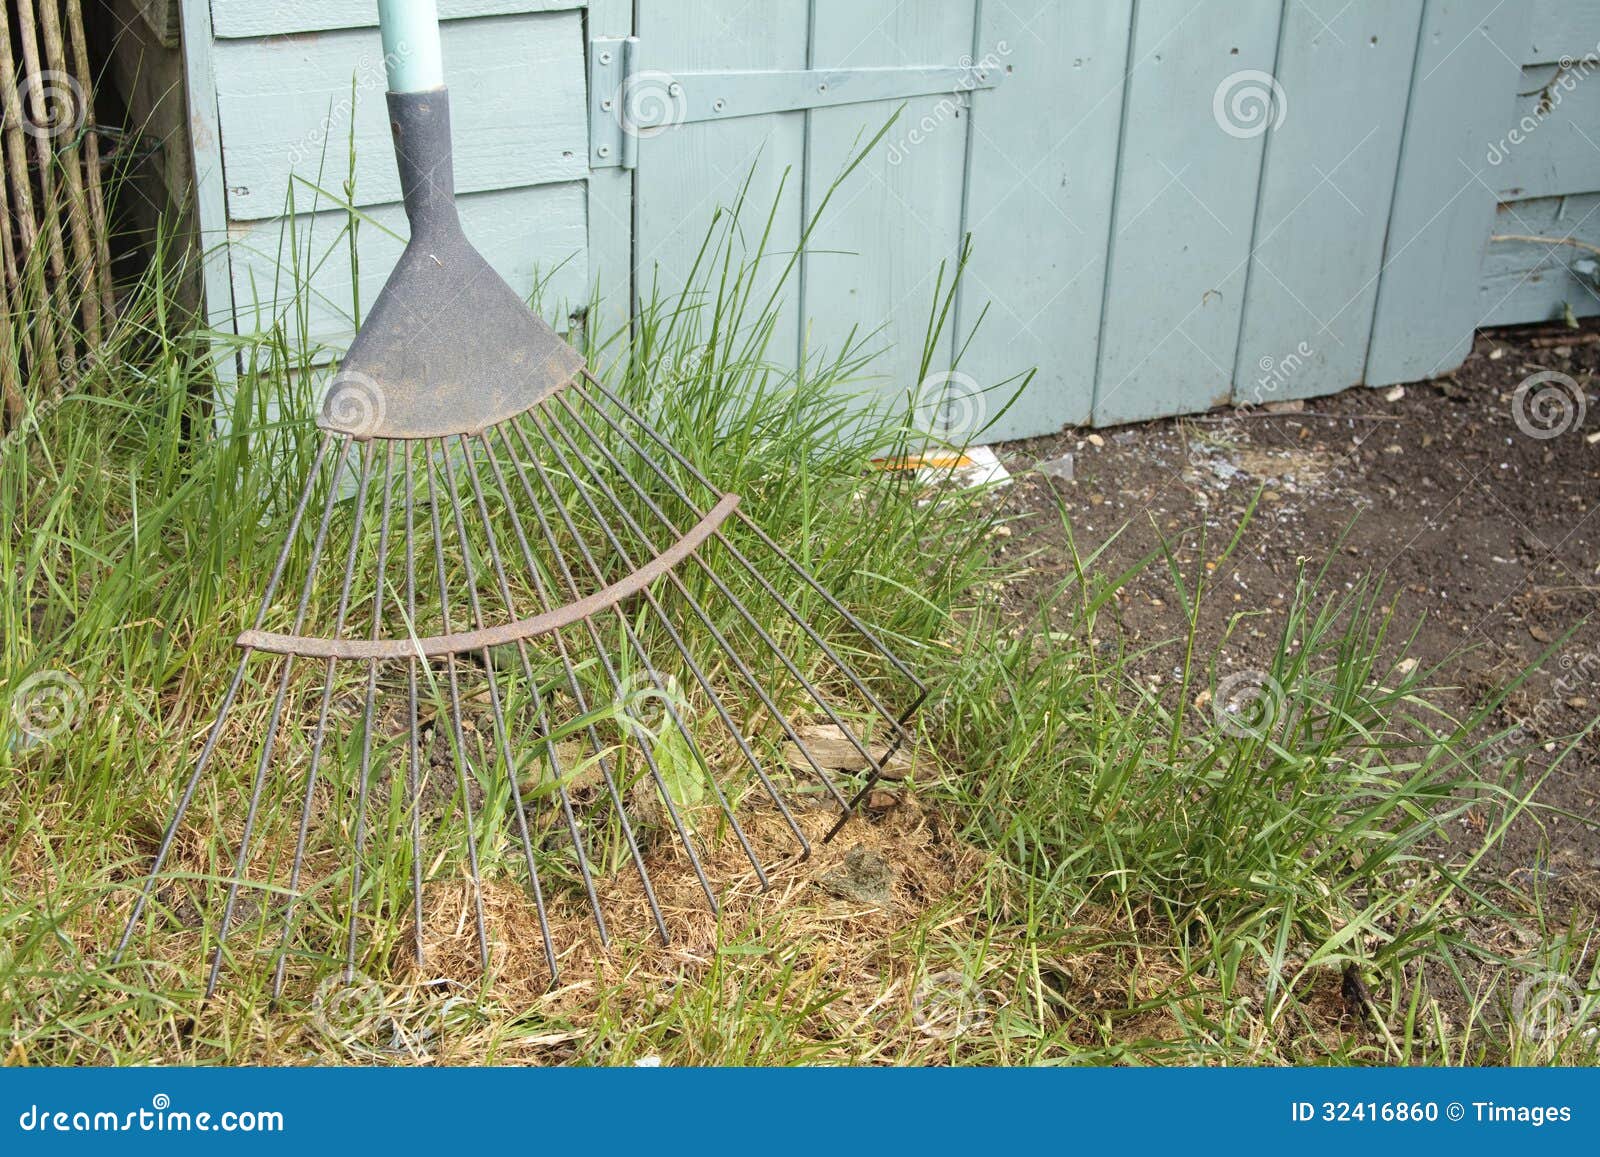 Garden rake stock photo. Image of gardening, garden, nobody - 32416860